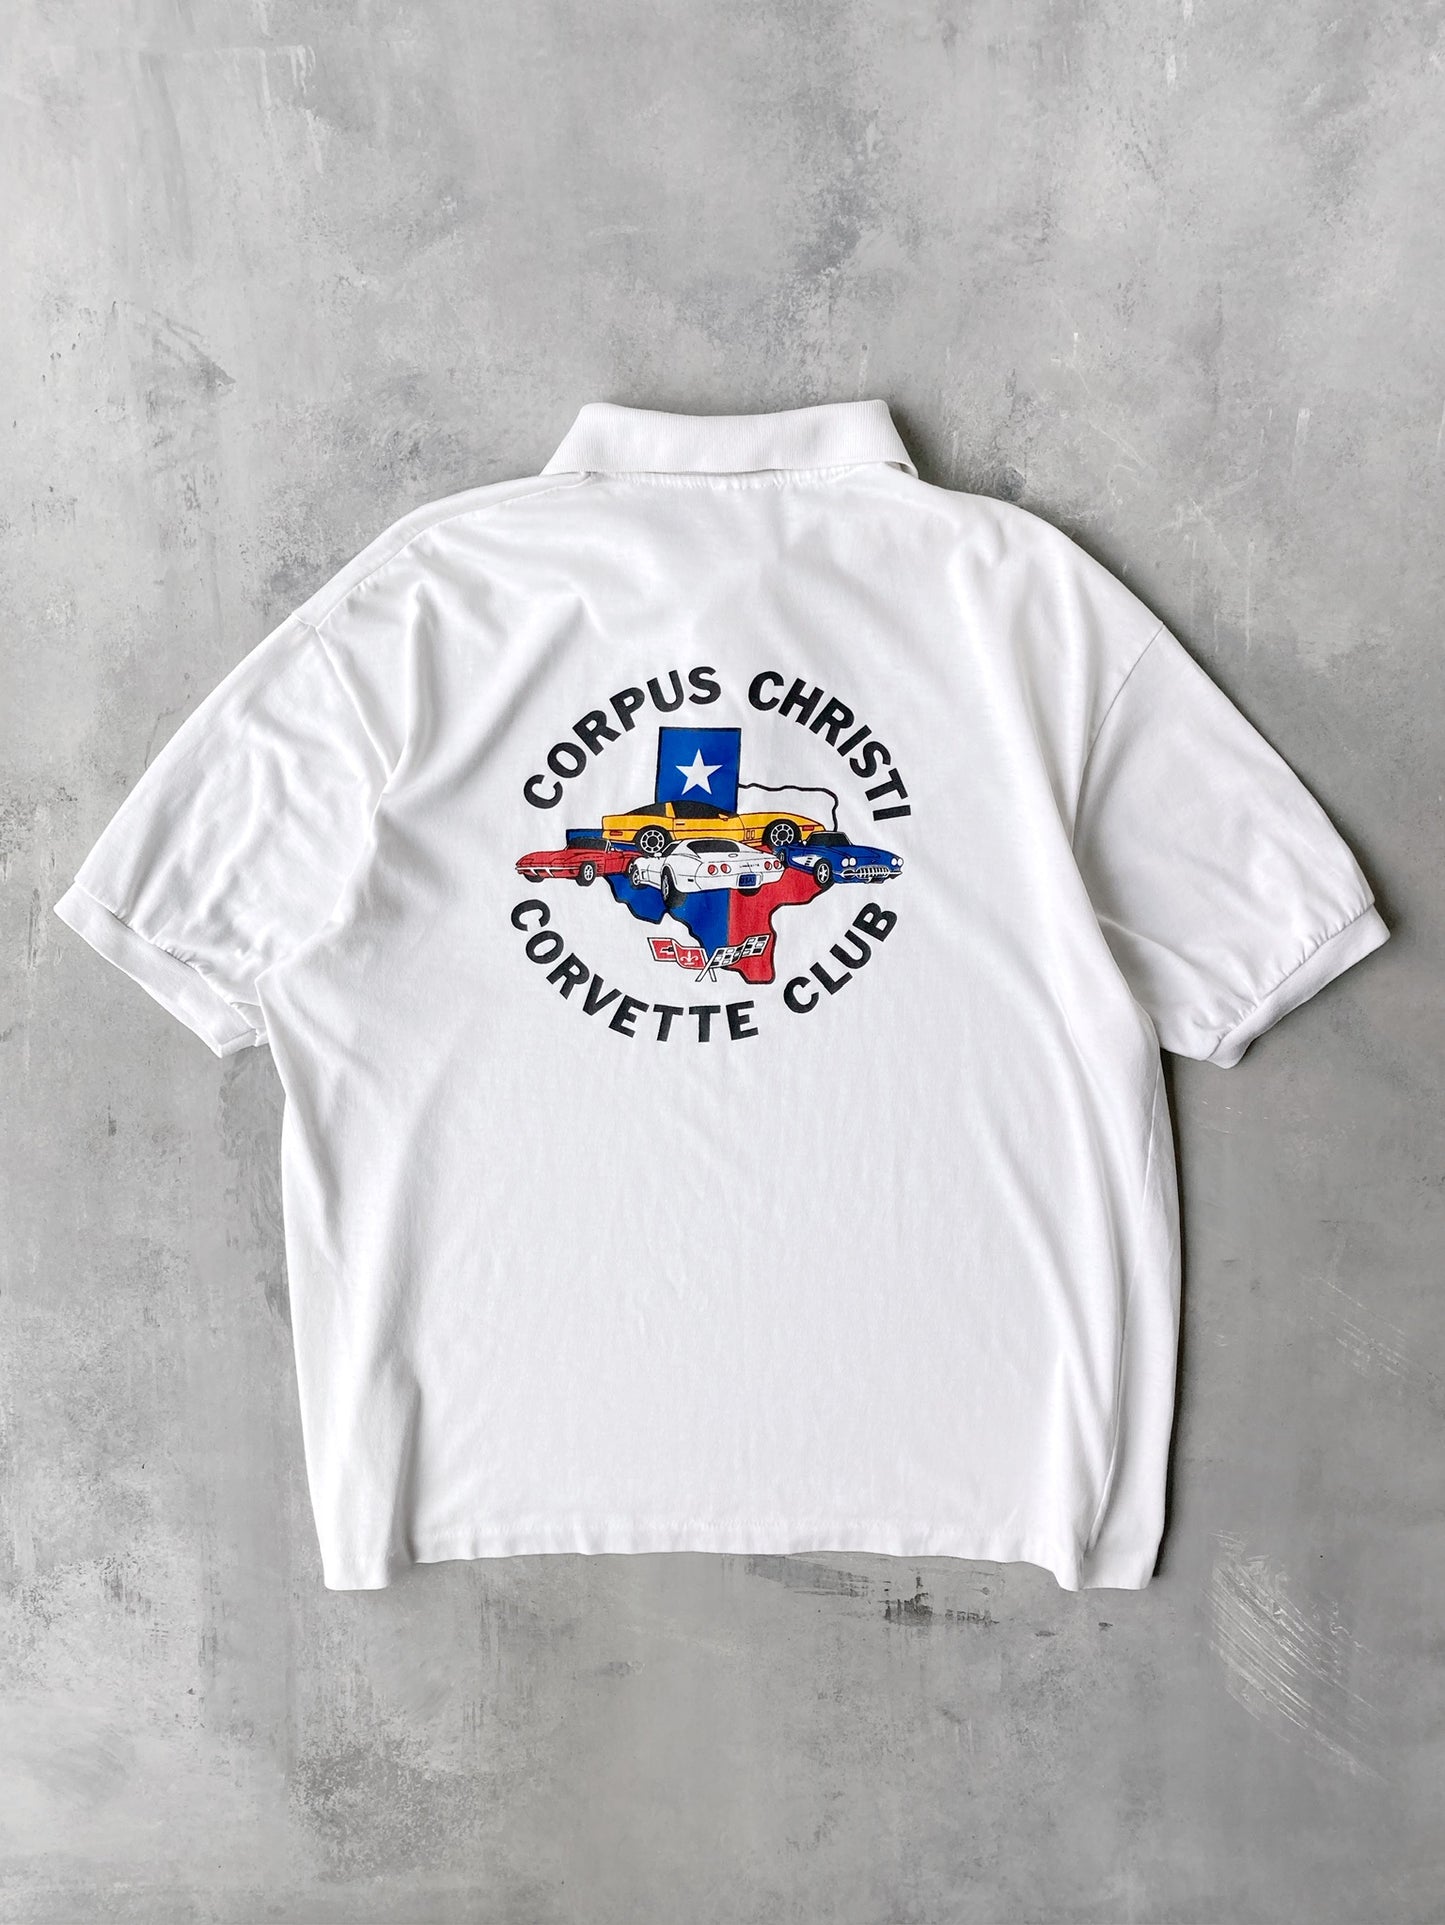 Corpus Christi Corvette Club Polo Shirt 80's - XL